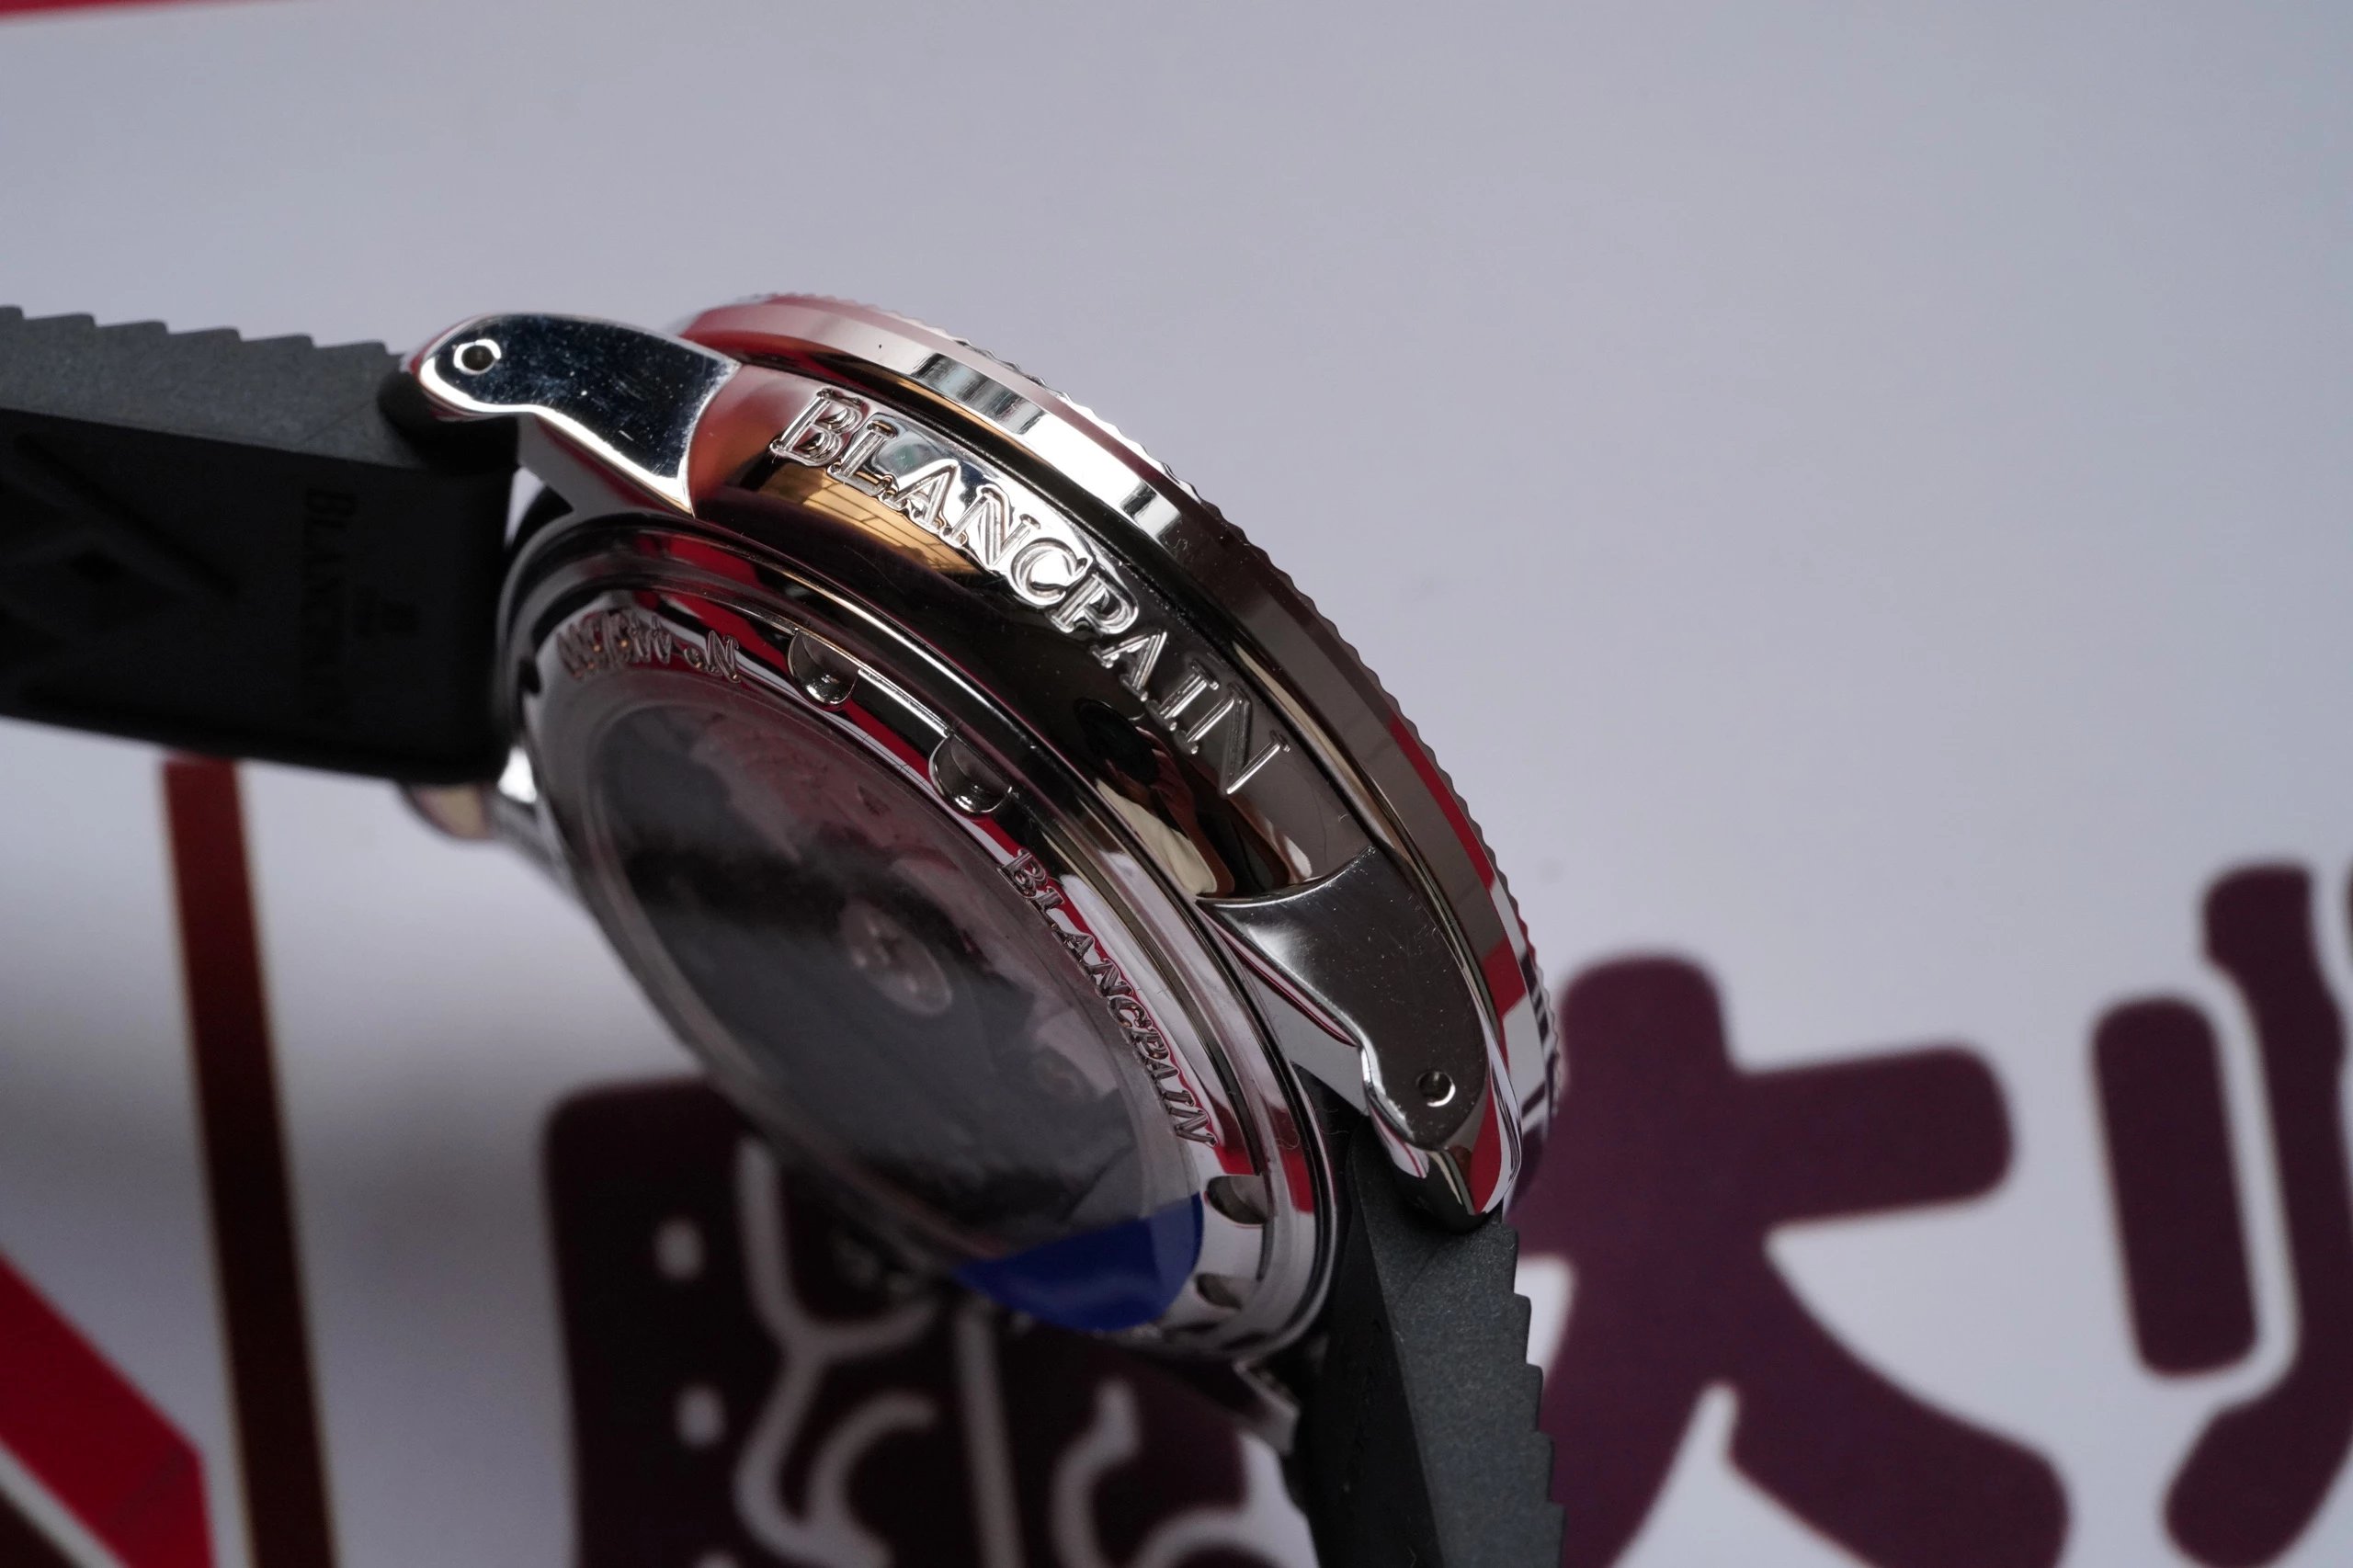 ZF新品发布——宝po五十噚系列5008B腕表(又名最美宝珀——梭子鱼)1.316L精钢材质，腕表尺寸40.30毫米X13.23毫米.超级精巧的表壳打磨以及爆棚的表壳细节还原质感